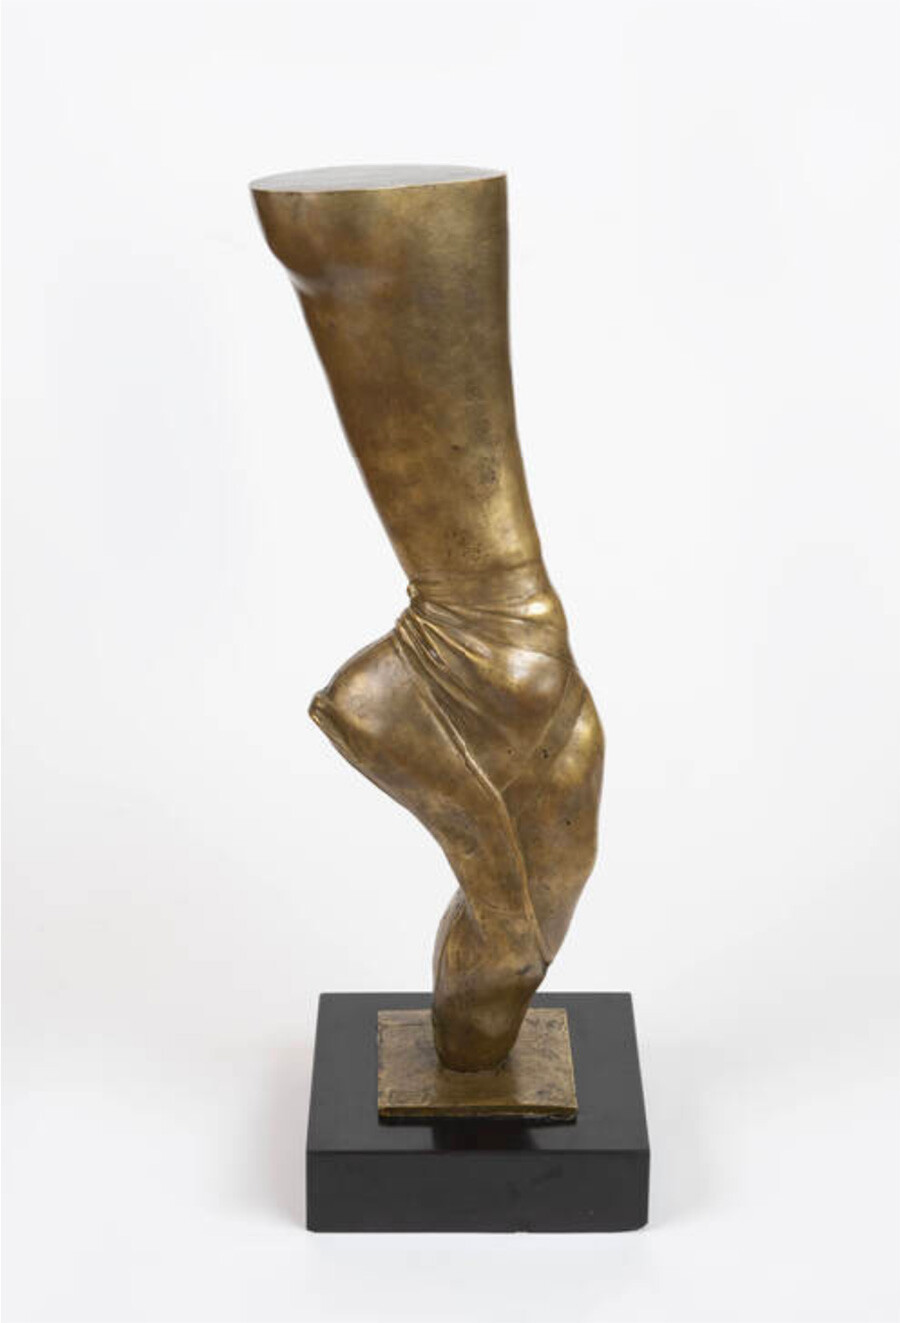 Pavlova's foot by sculptor Boris Fredman-Kluzel